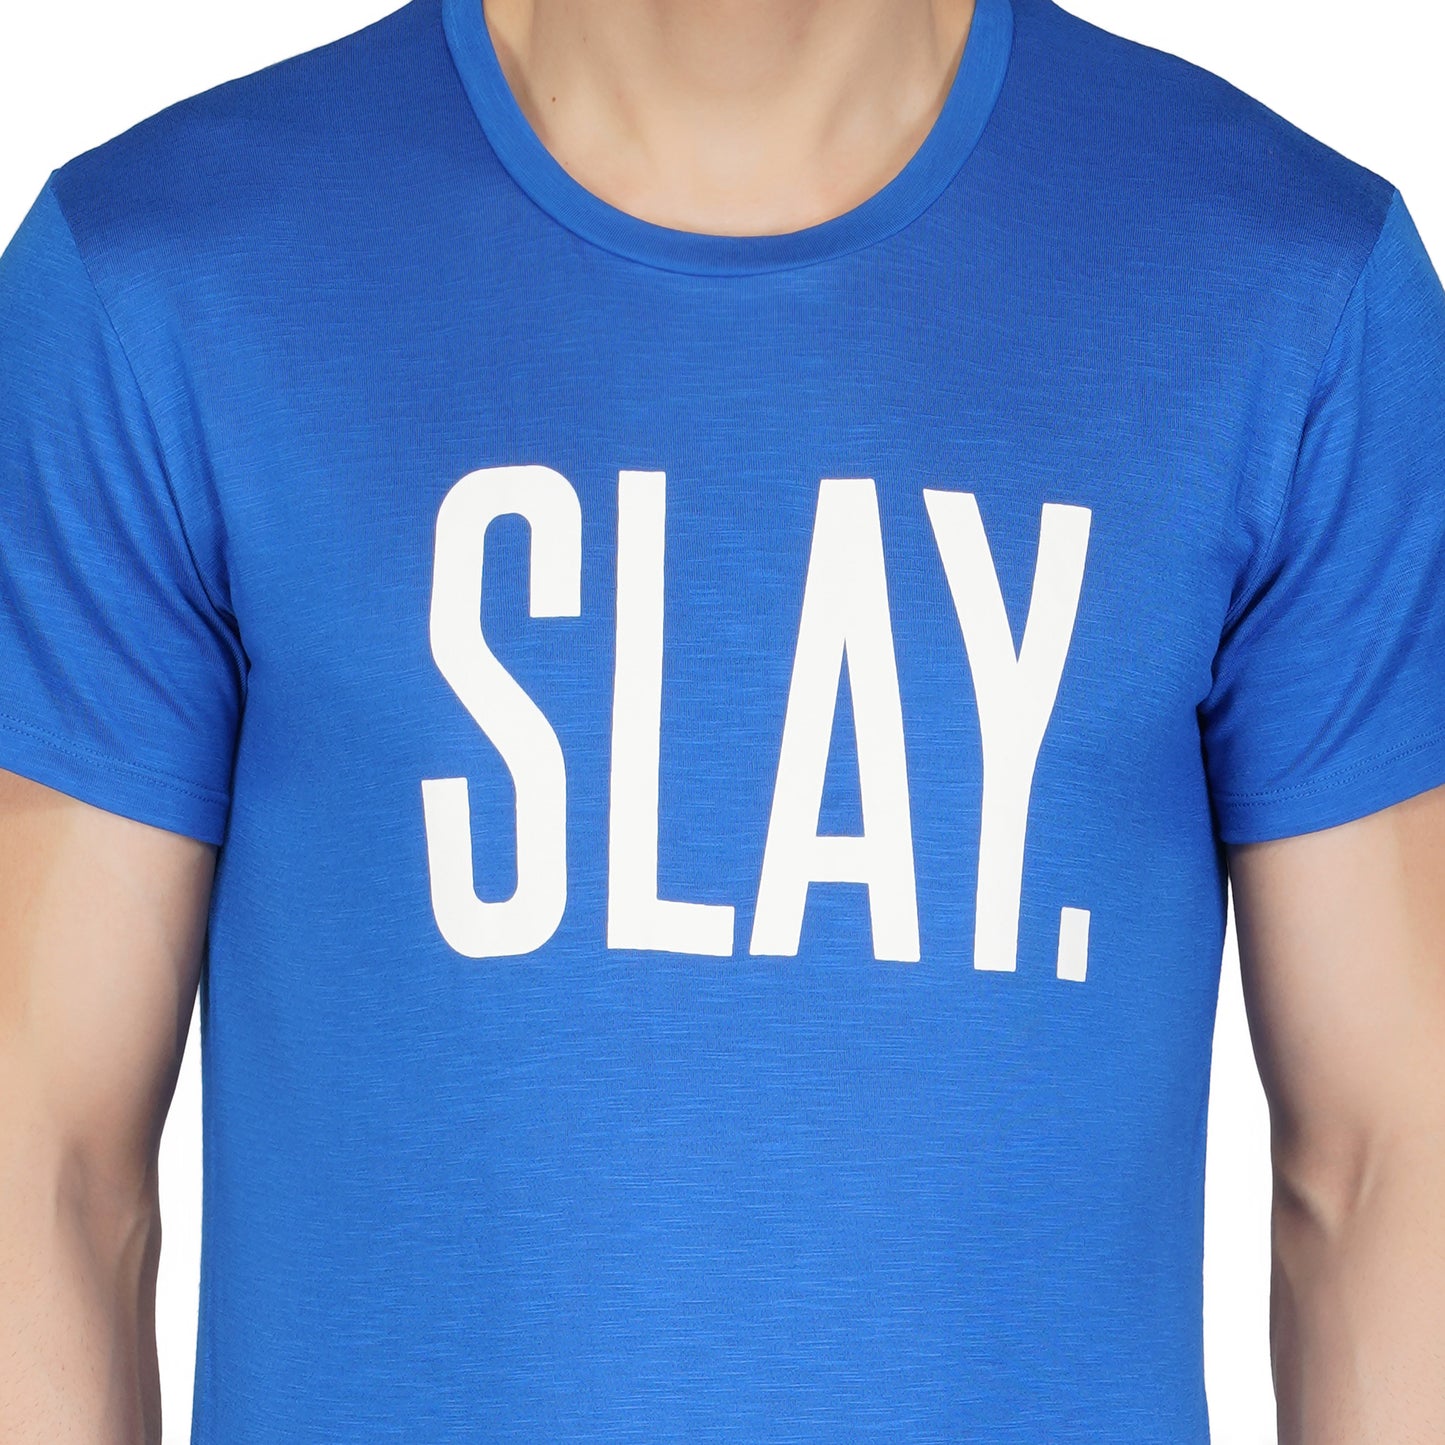 SLAY. Men's Blue Printed T-Shirt